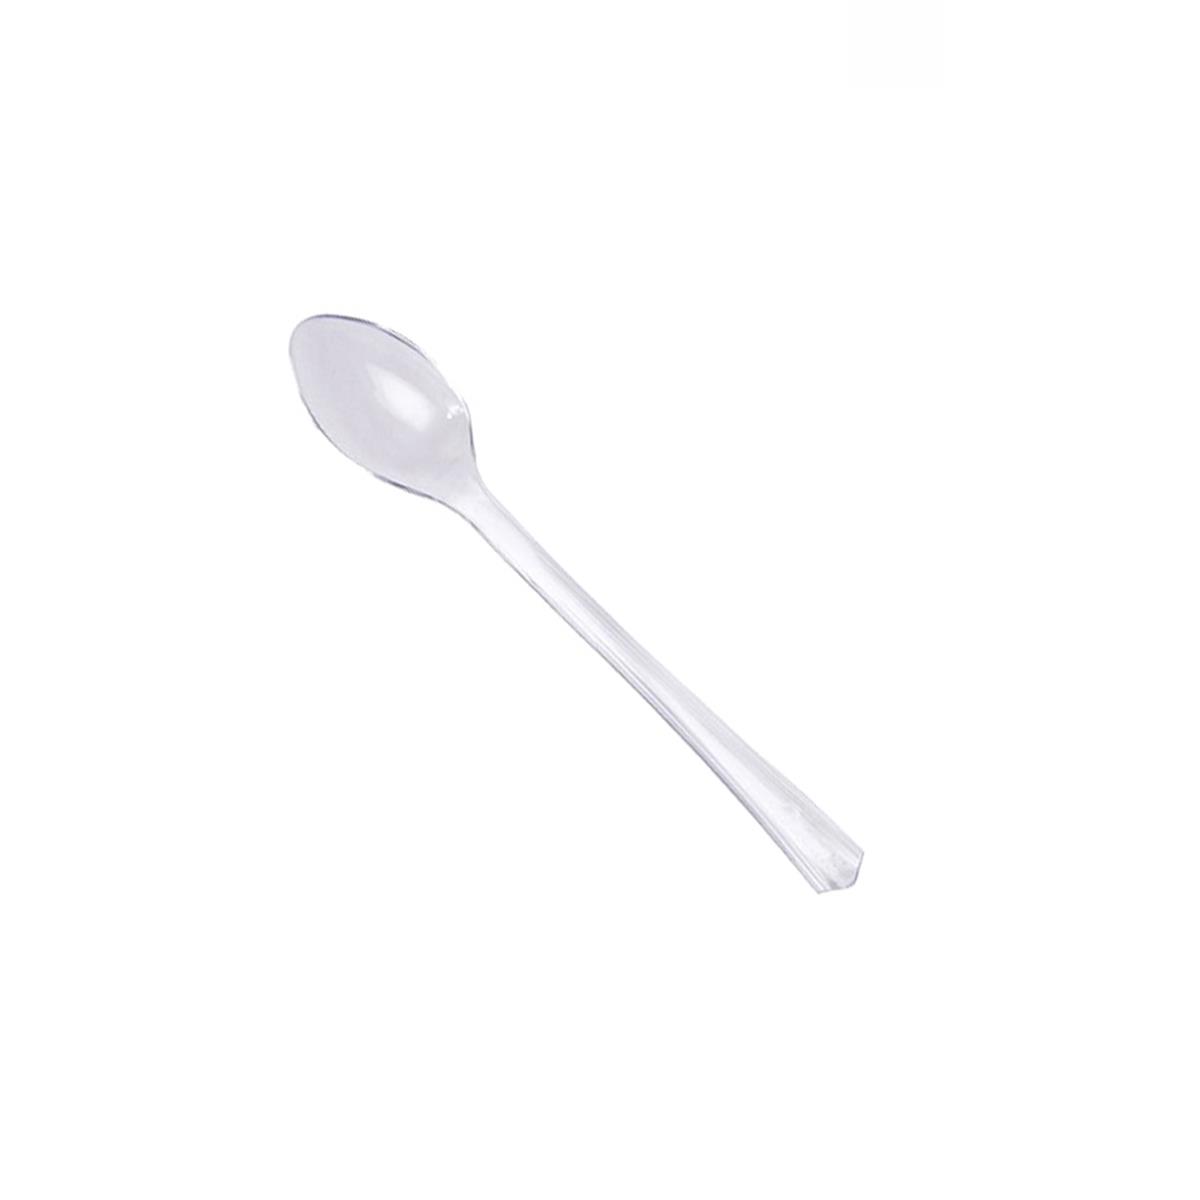 Aptspcl Pec 4.2 In. Petites Tasting Spoon, Clear